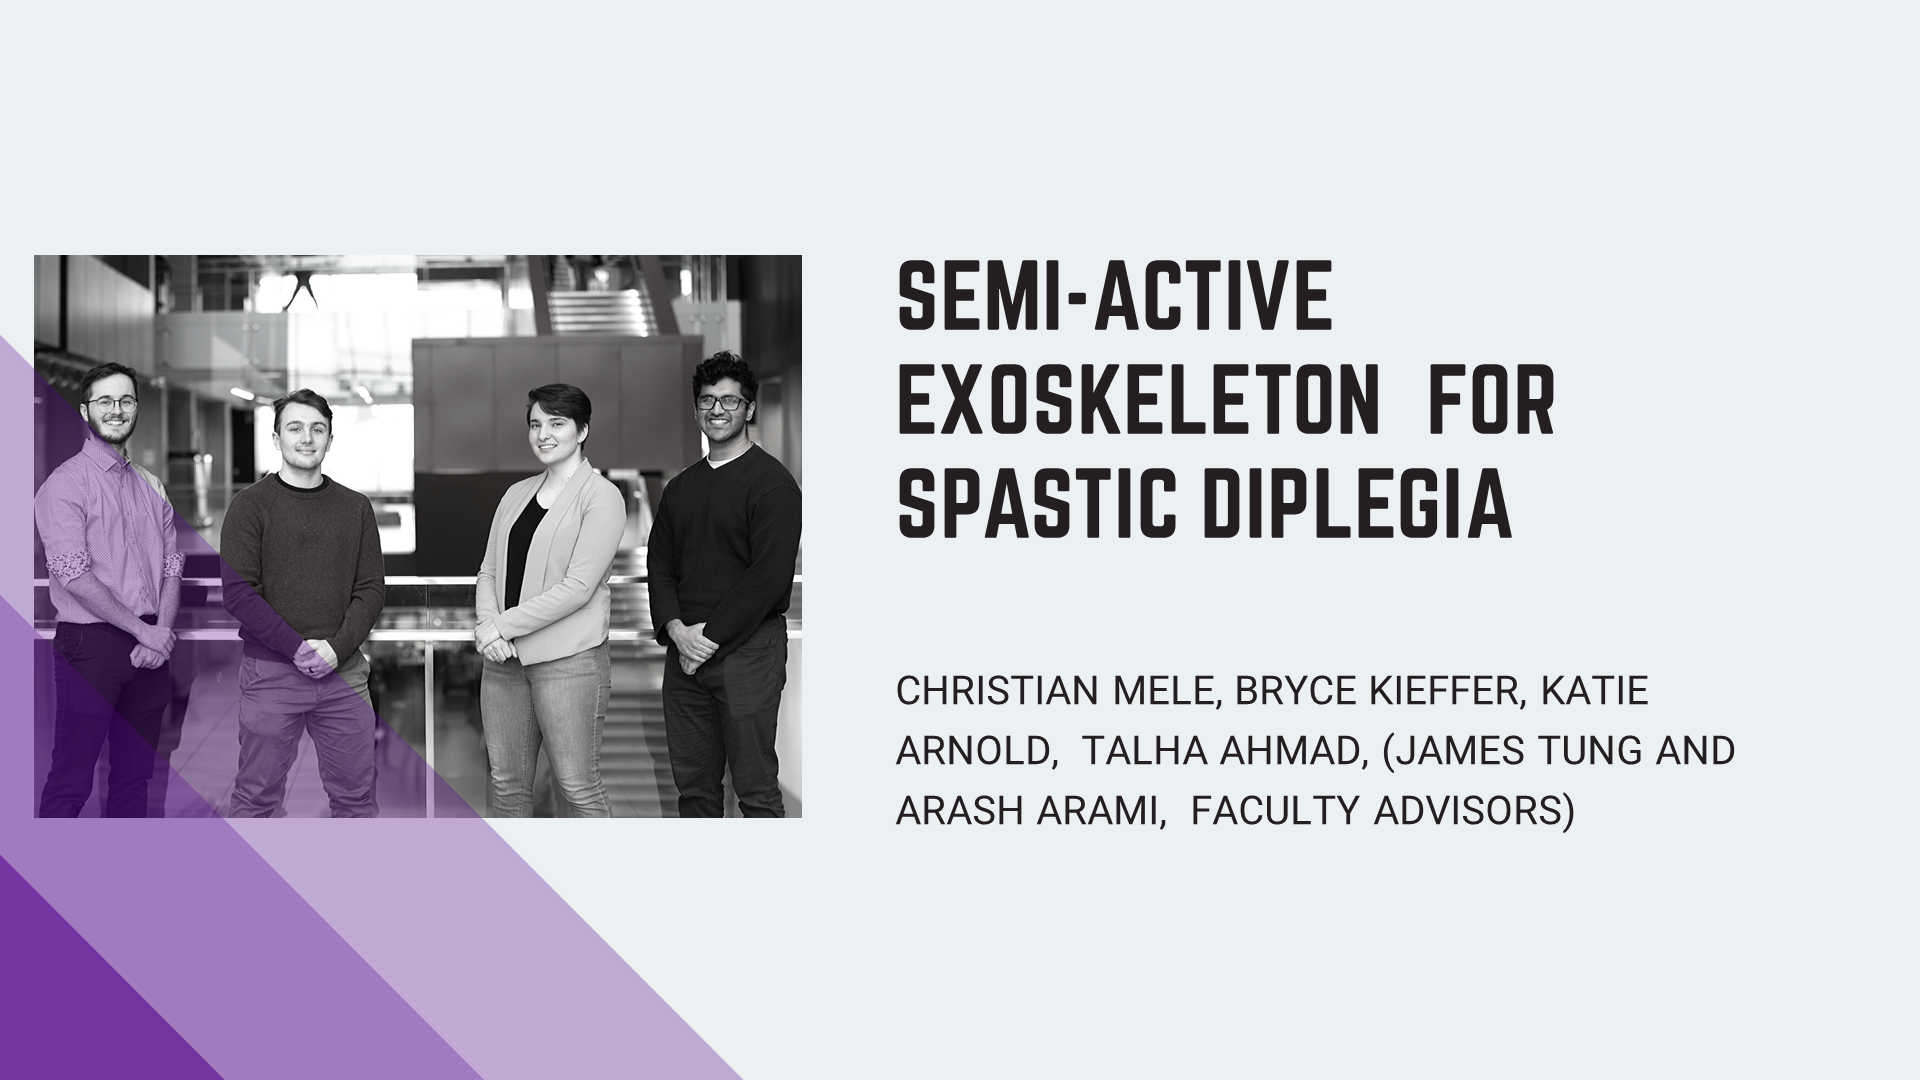 Semi-Active Exoskeleton for Spastic Diplegia